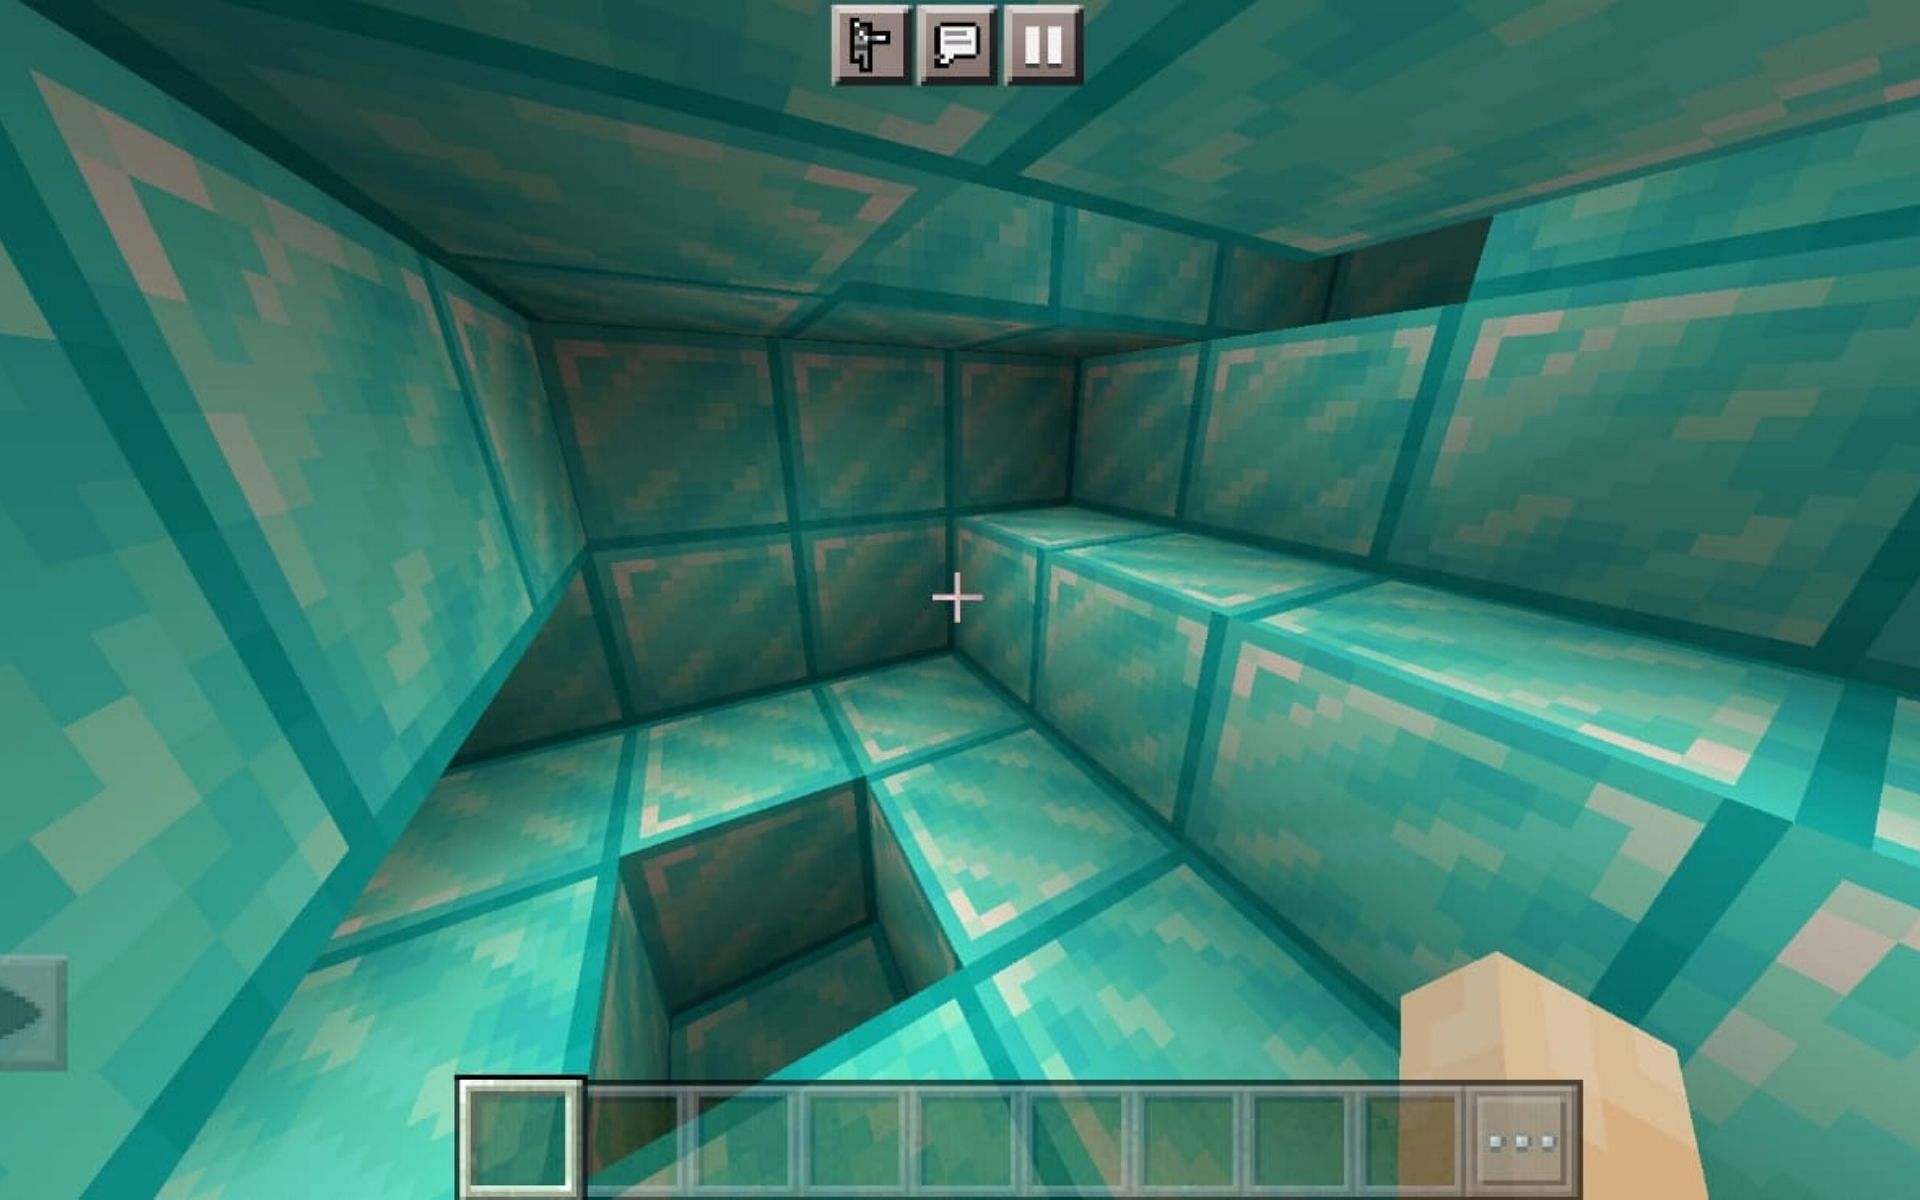 Diamond blocks in Minecraft (Image via Minecraft)